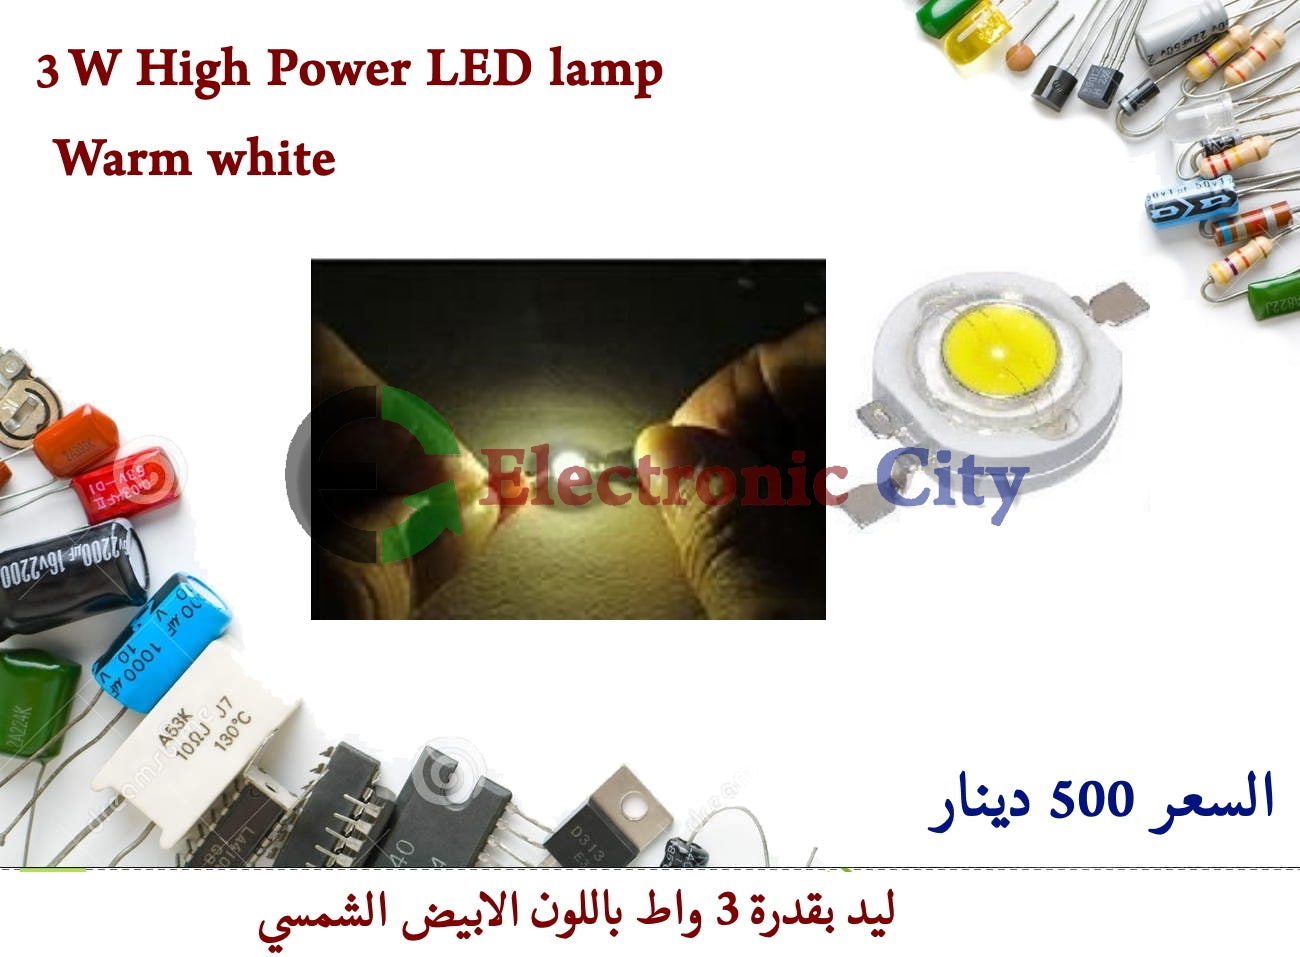 3W High Power LED lamp Warm white